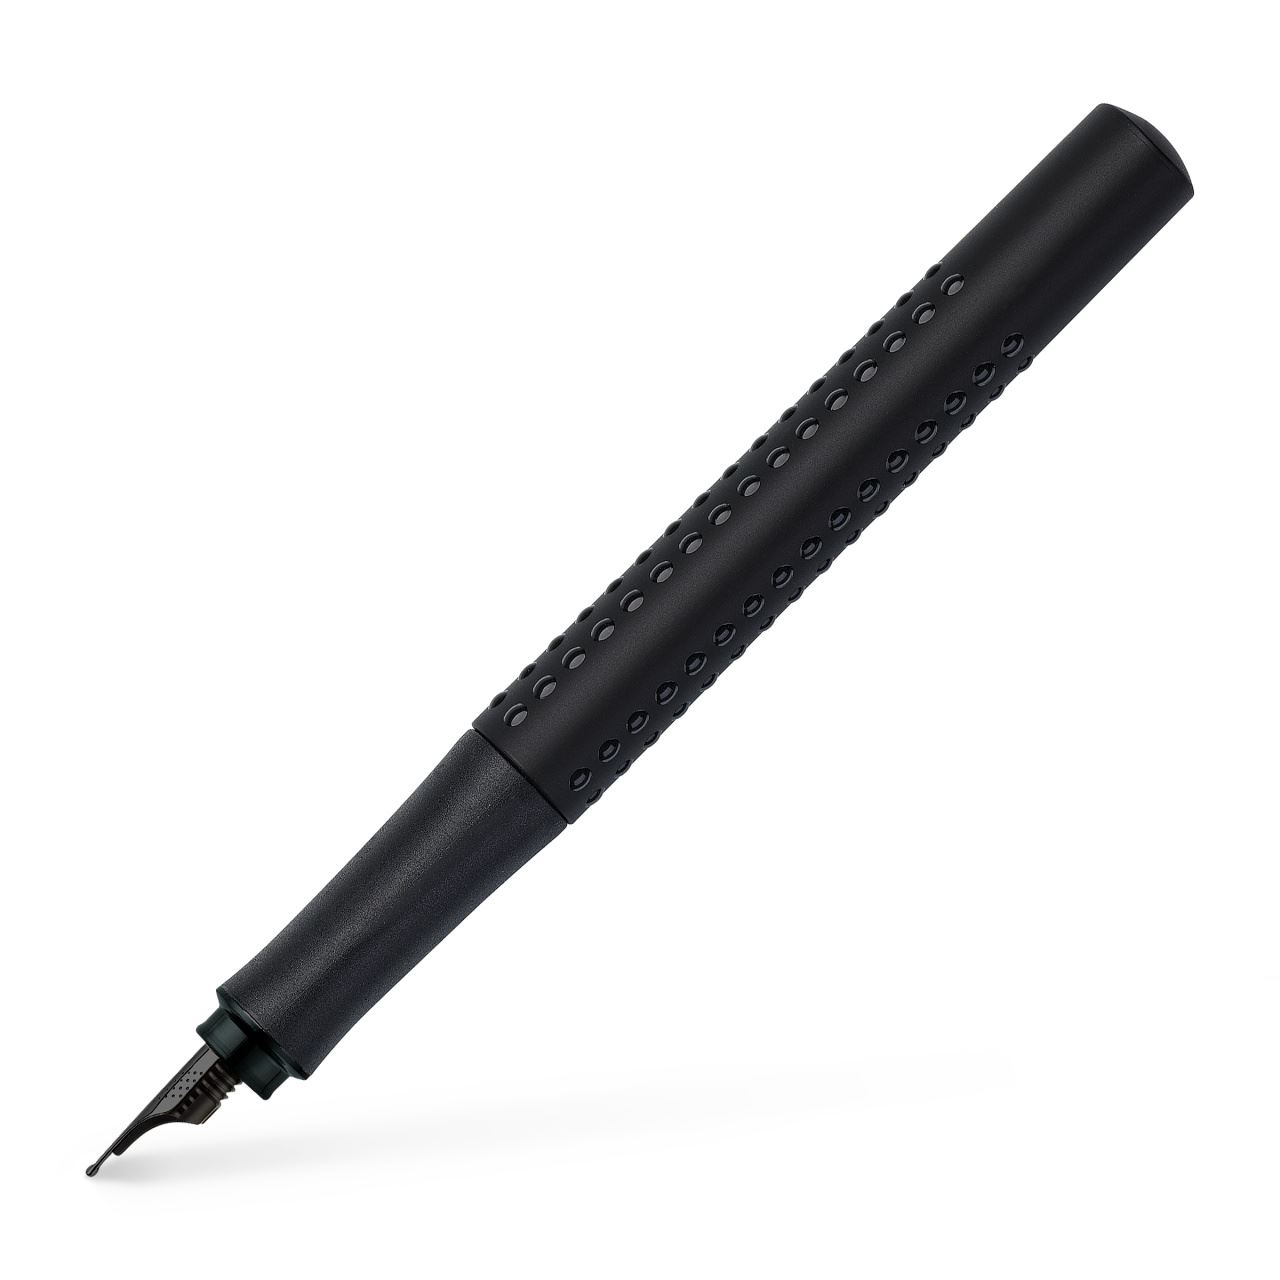 Faber-Castell - Penna stilografica Grip Edition All Black B